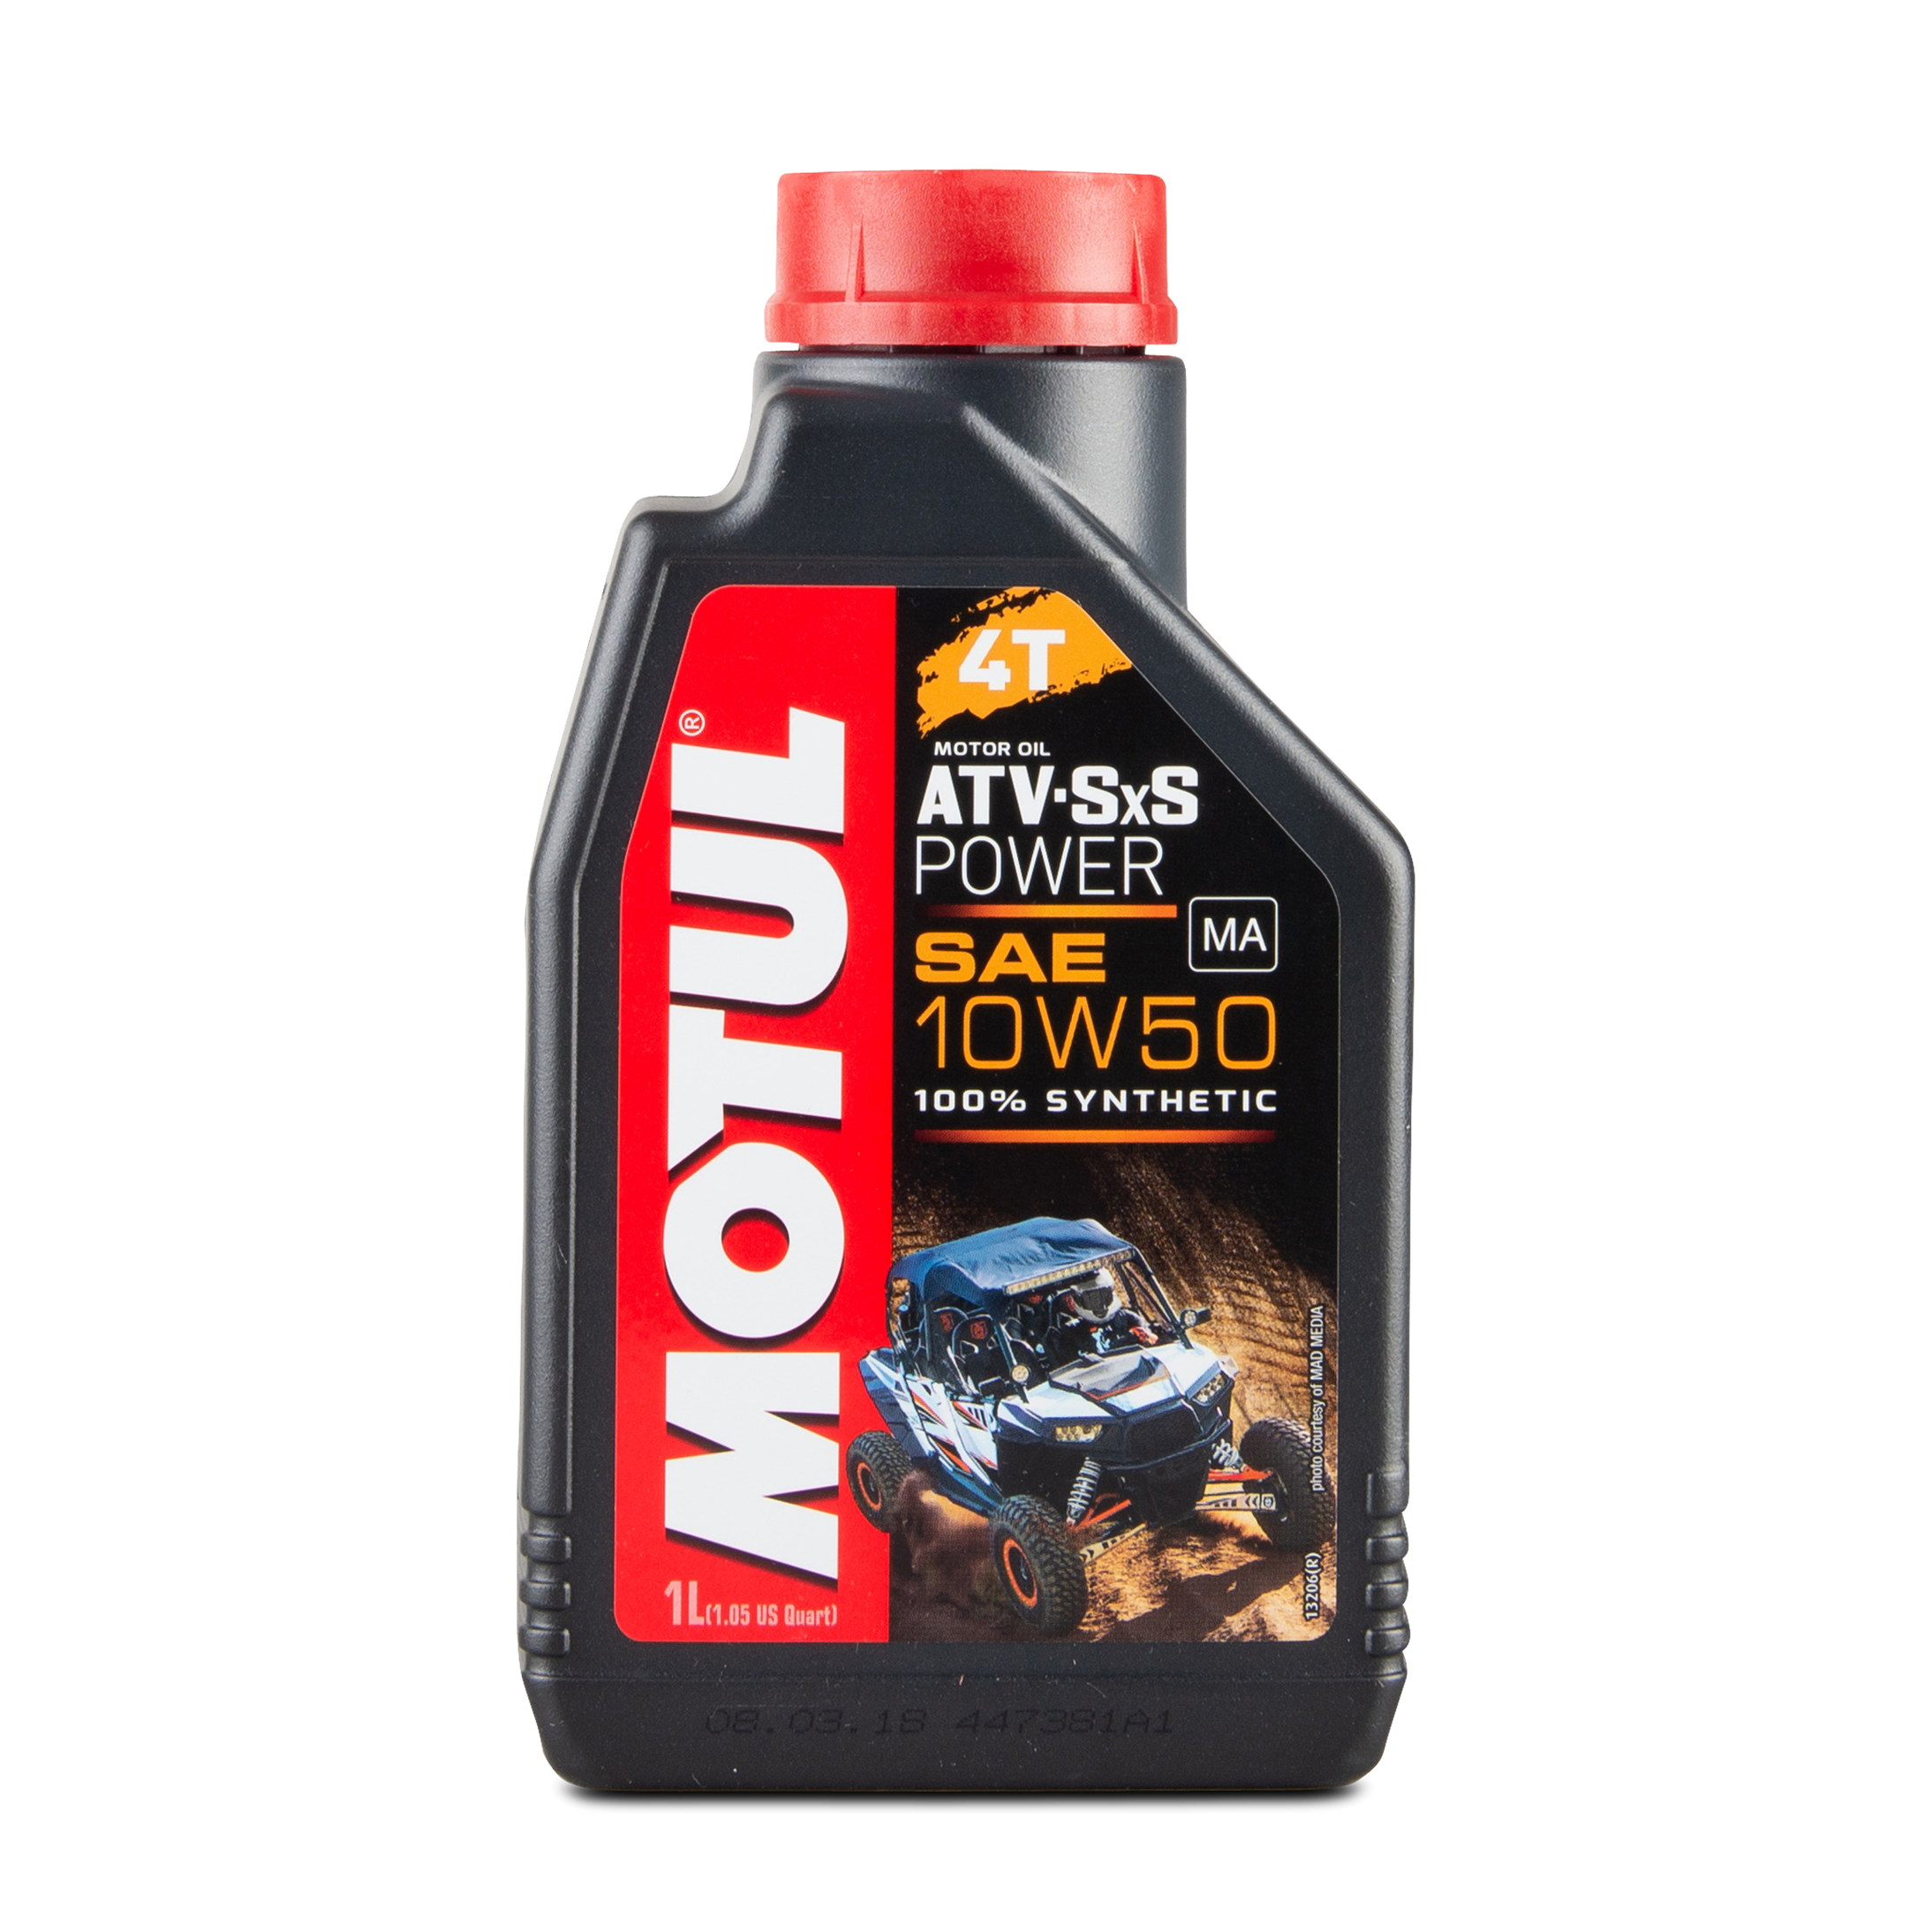 motul-atv-sxs-power-10w50-4t-fully-synthetic-oil-1l-lowest-price